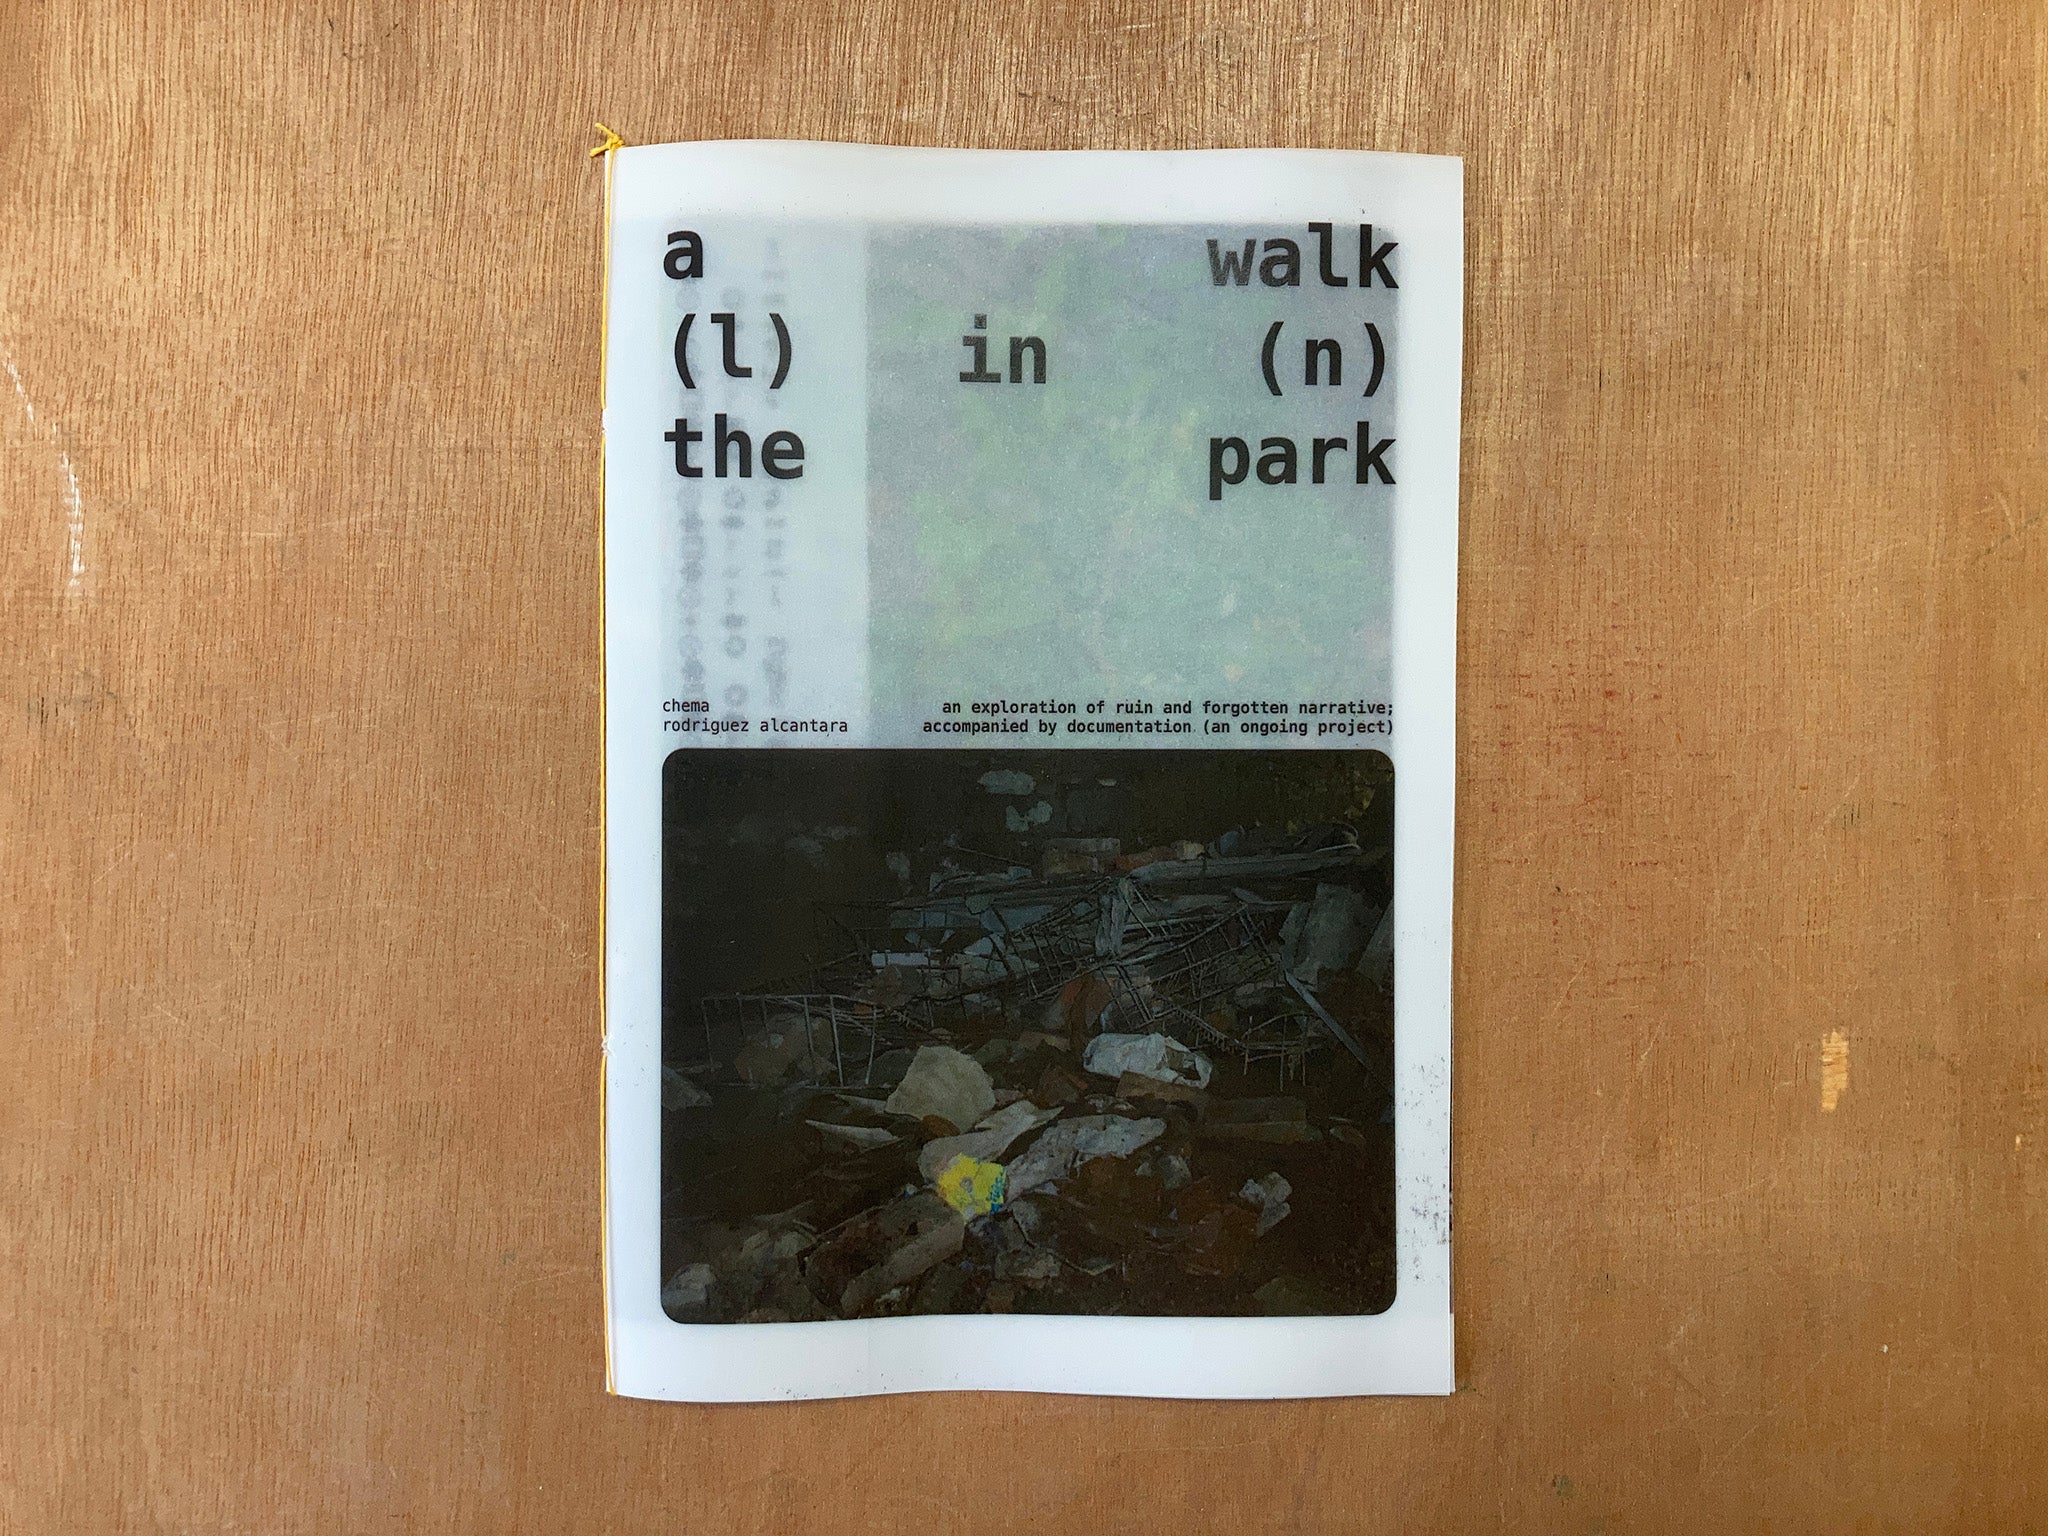 A WALK IN (L)IN(N) THE PARK by chema rodriguez alcantara